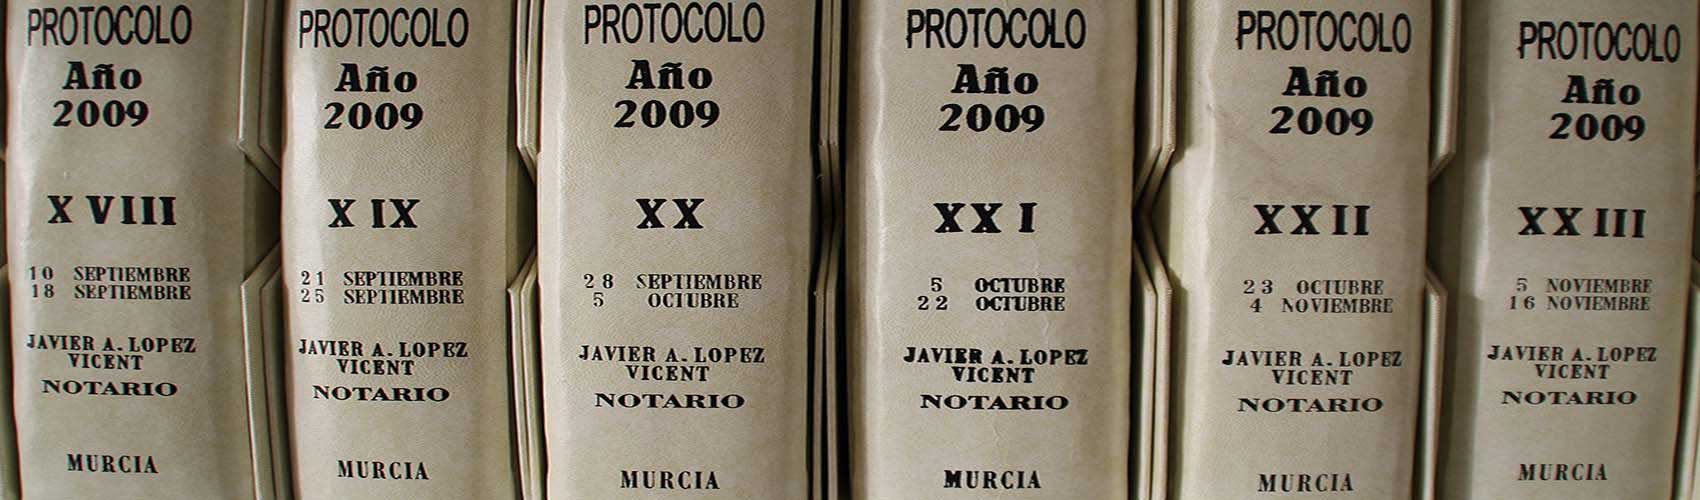 Javier-Alfonso-López-Vicent-Villaleal-protocolo-escritura-notaría-murcia-notario-centro-capital-cerca-plateria-traperia-slide